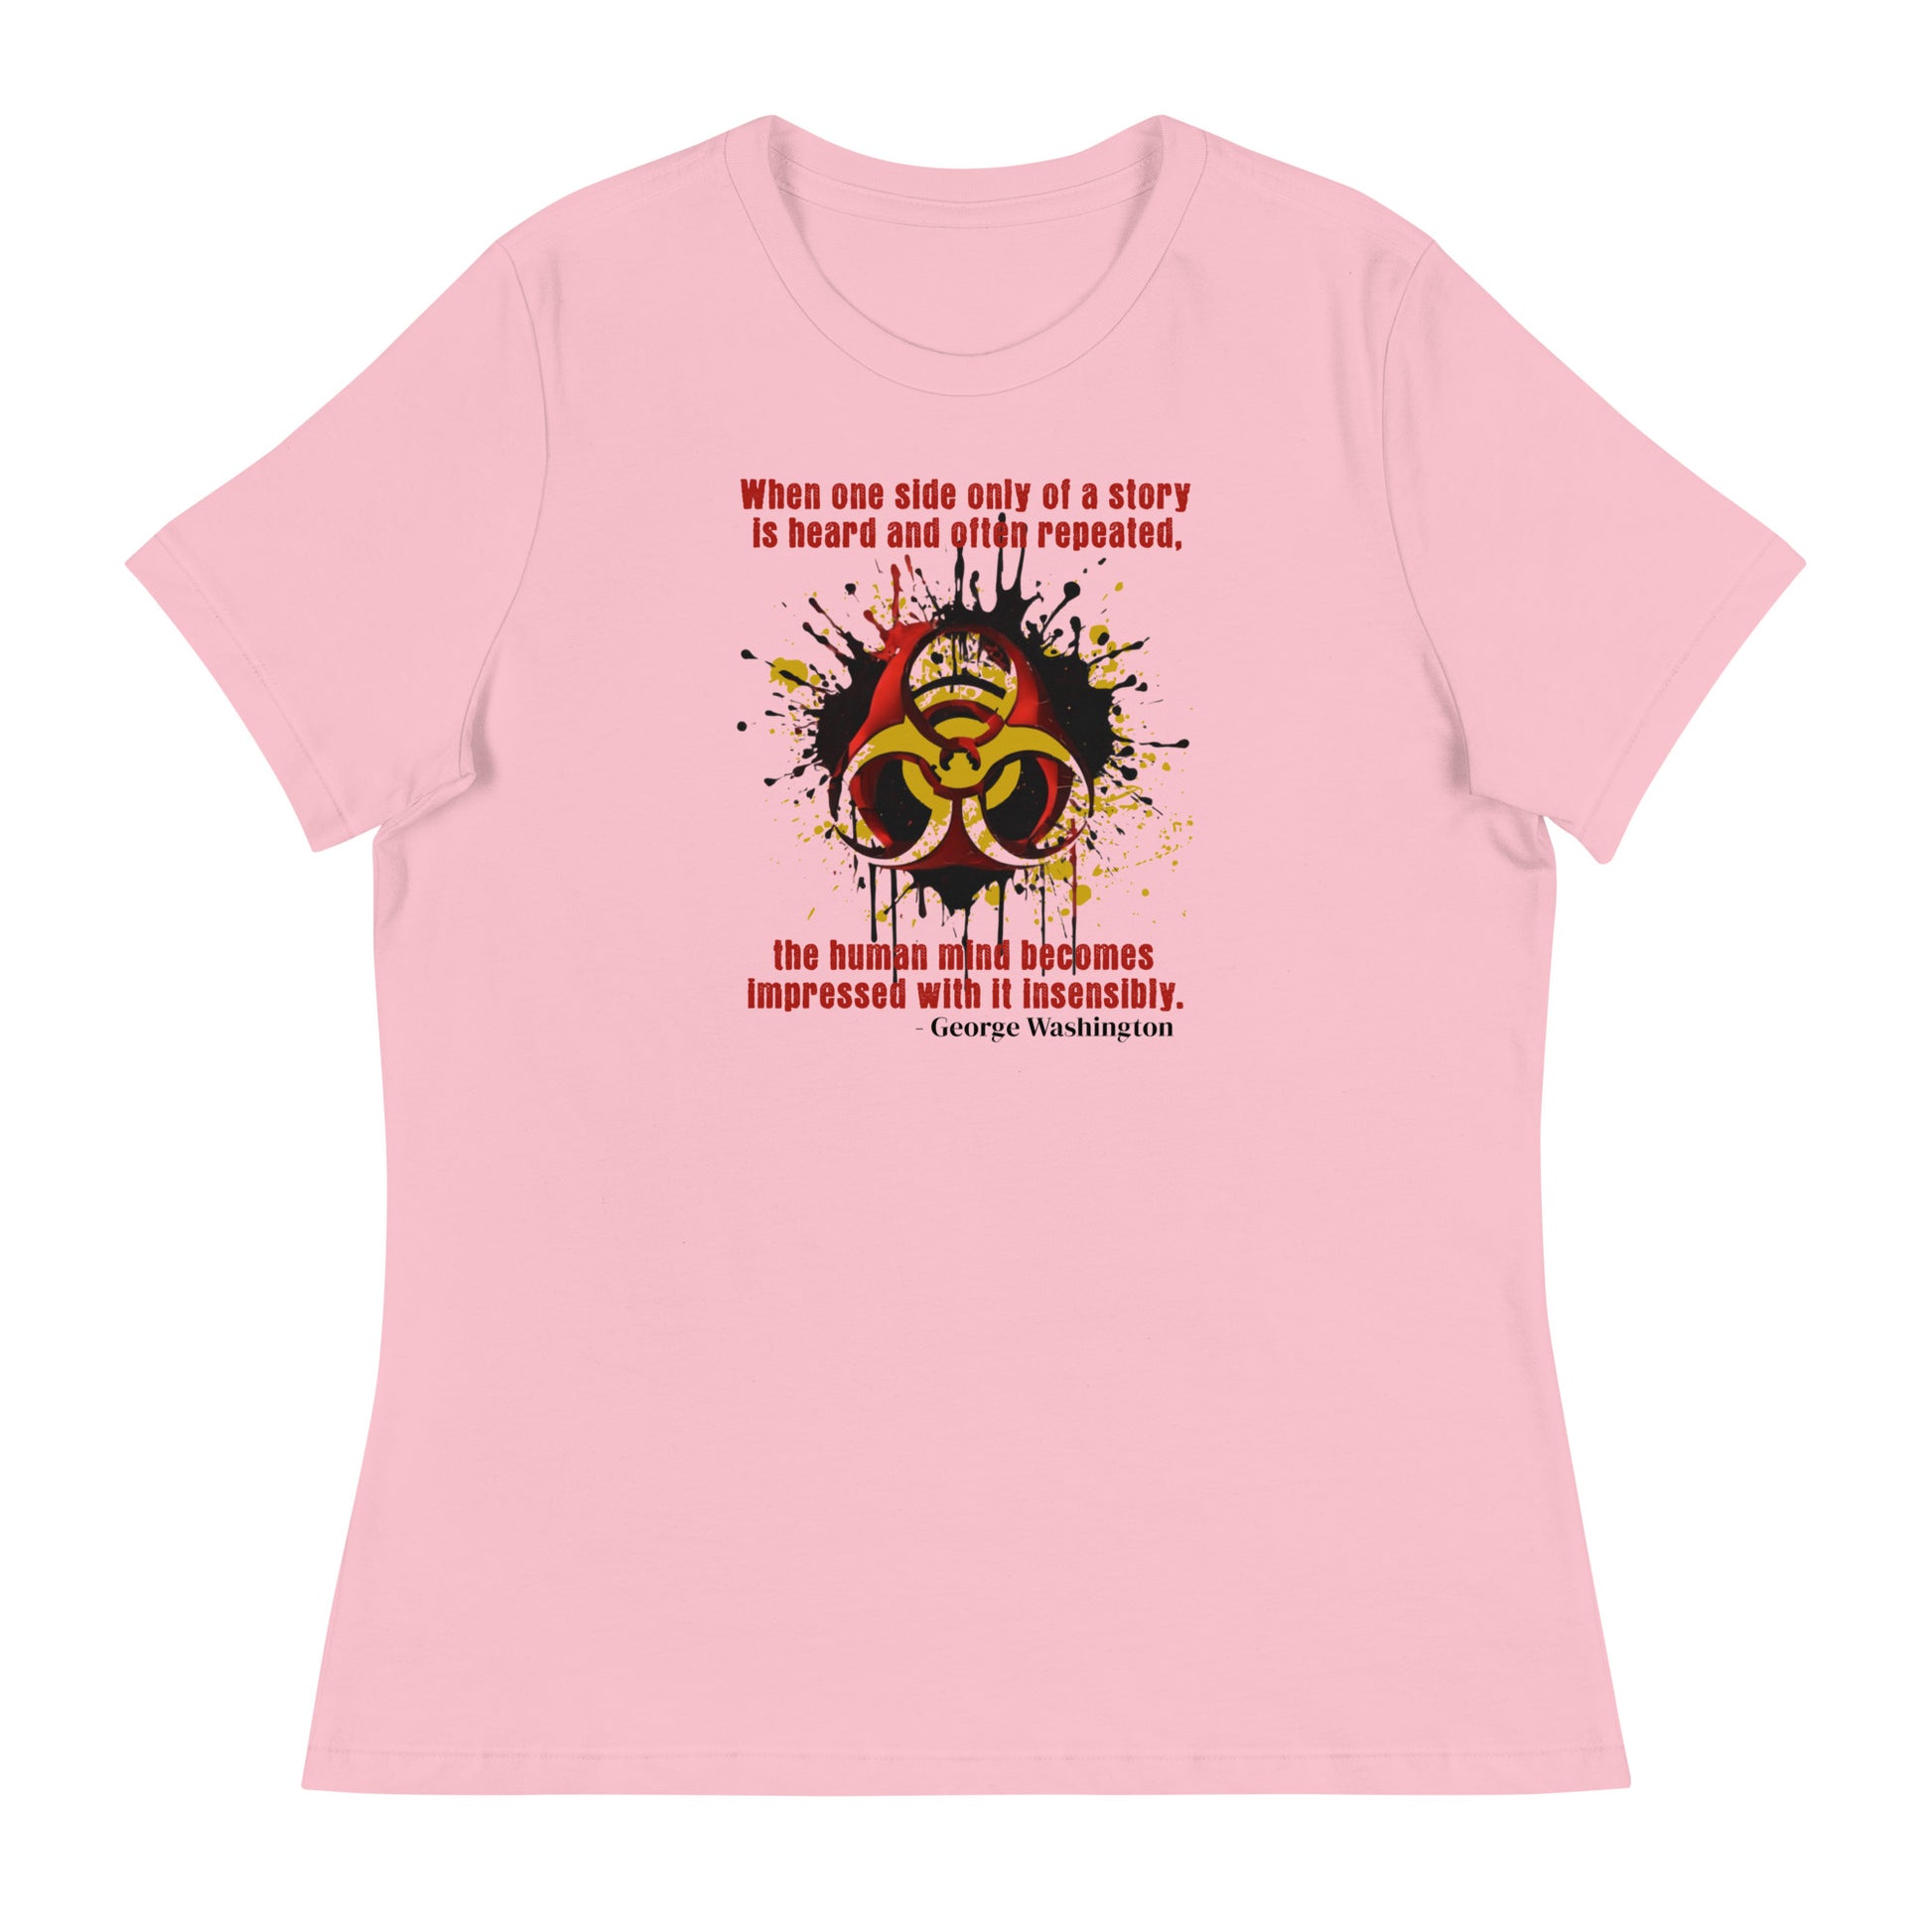 Beware of Propaganda Women's T-Shirt Pink